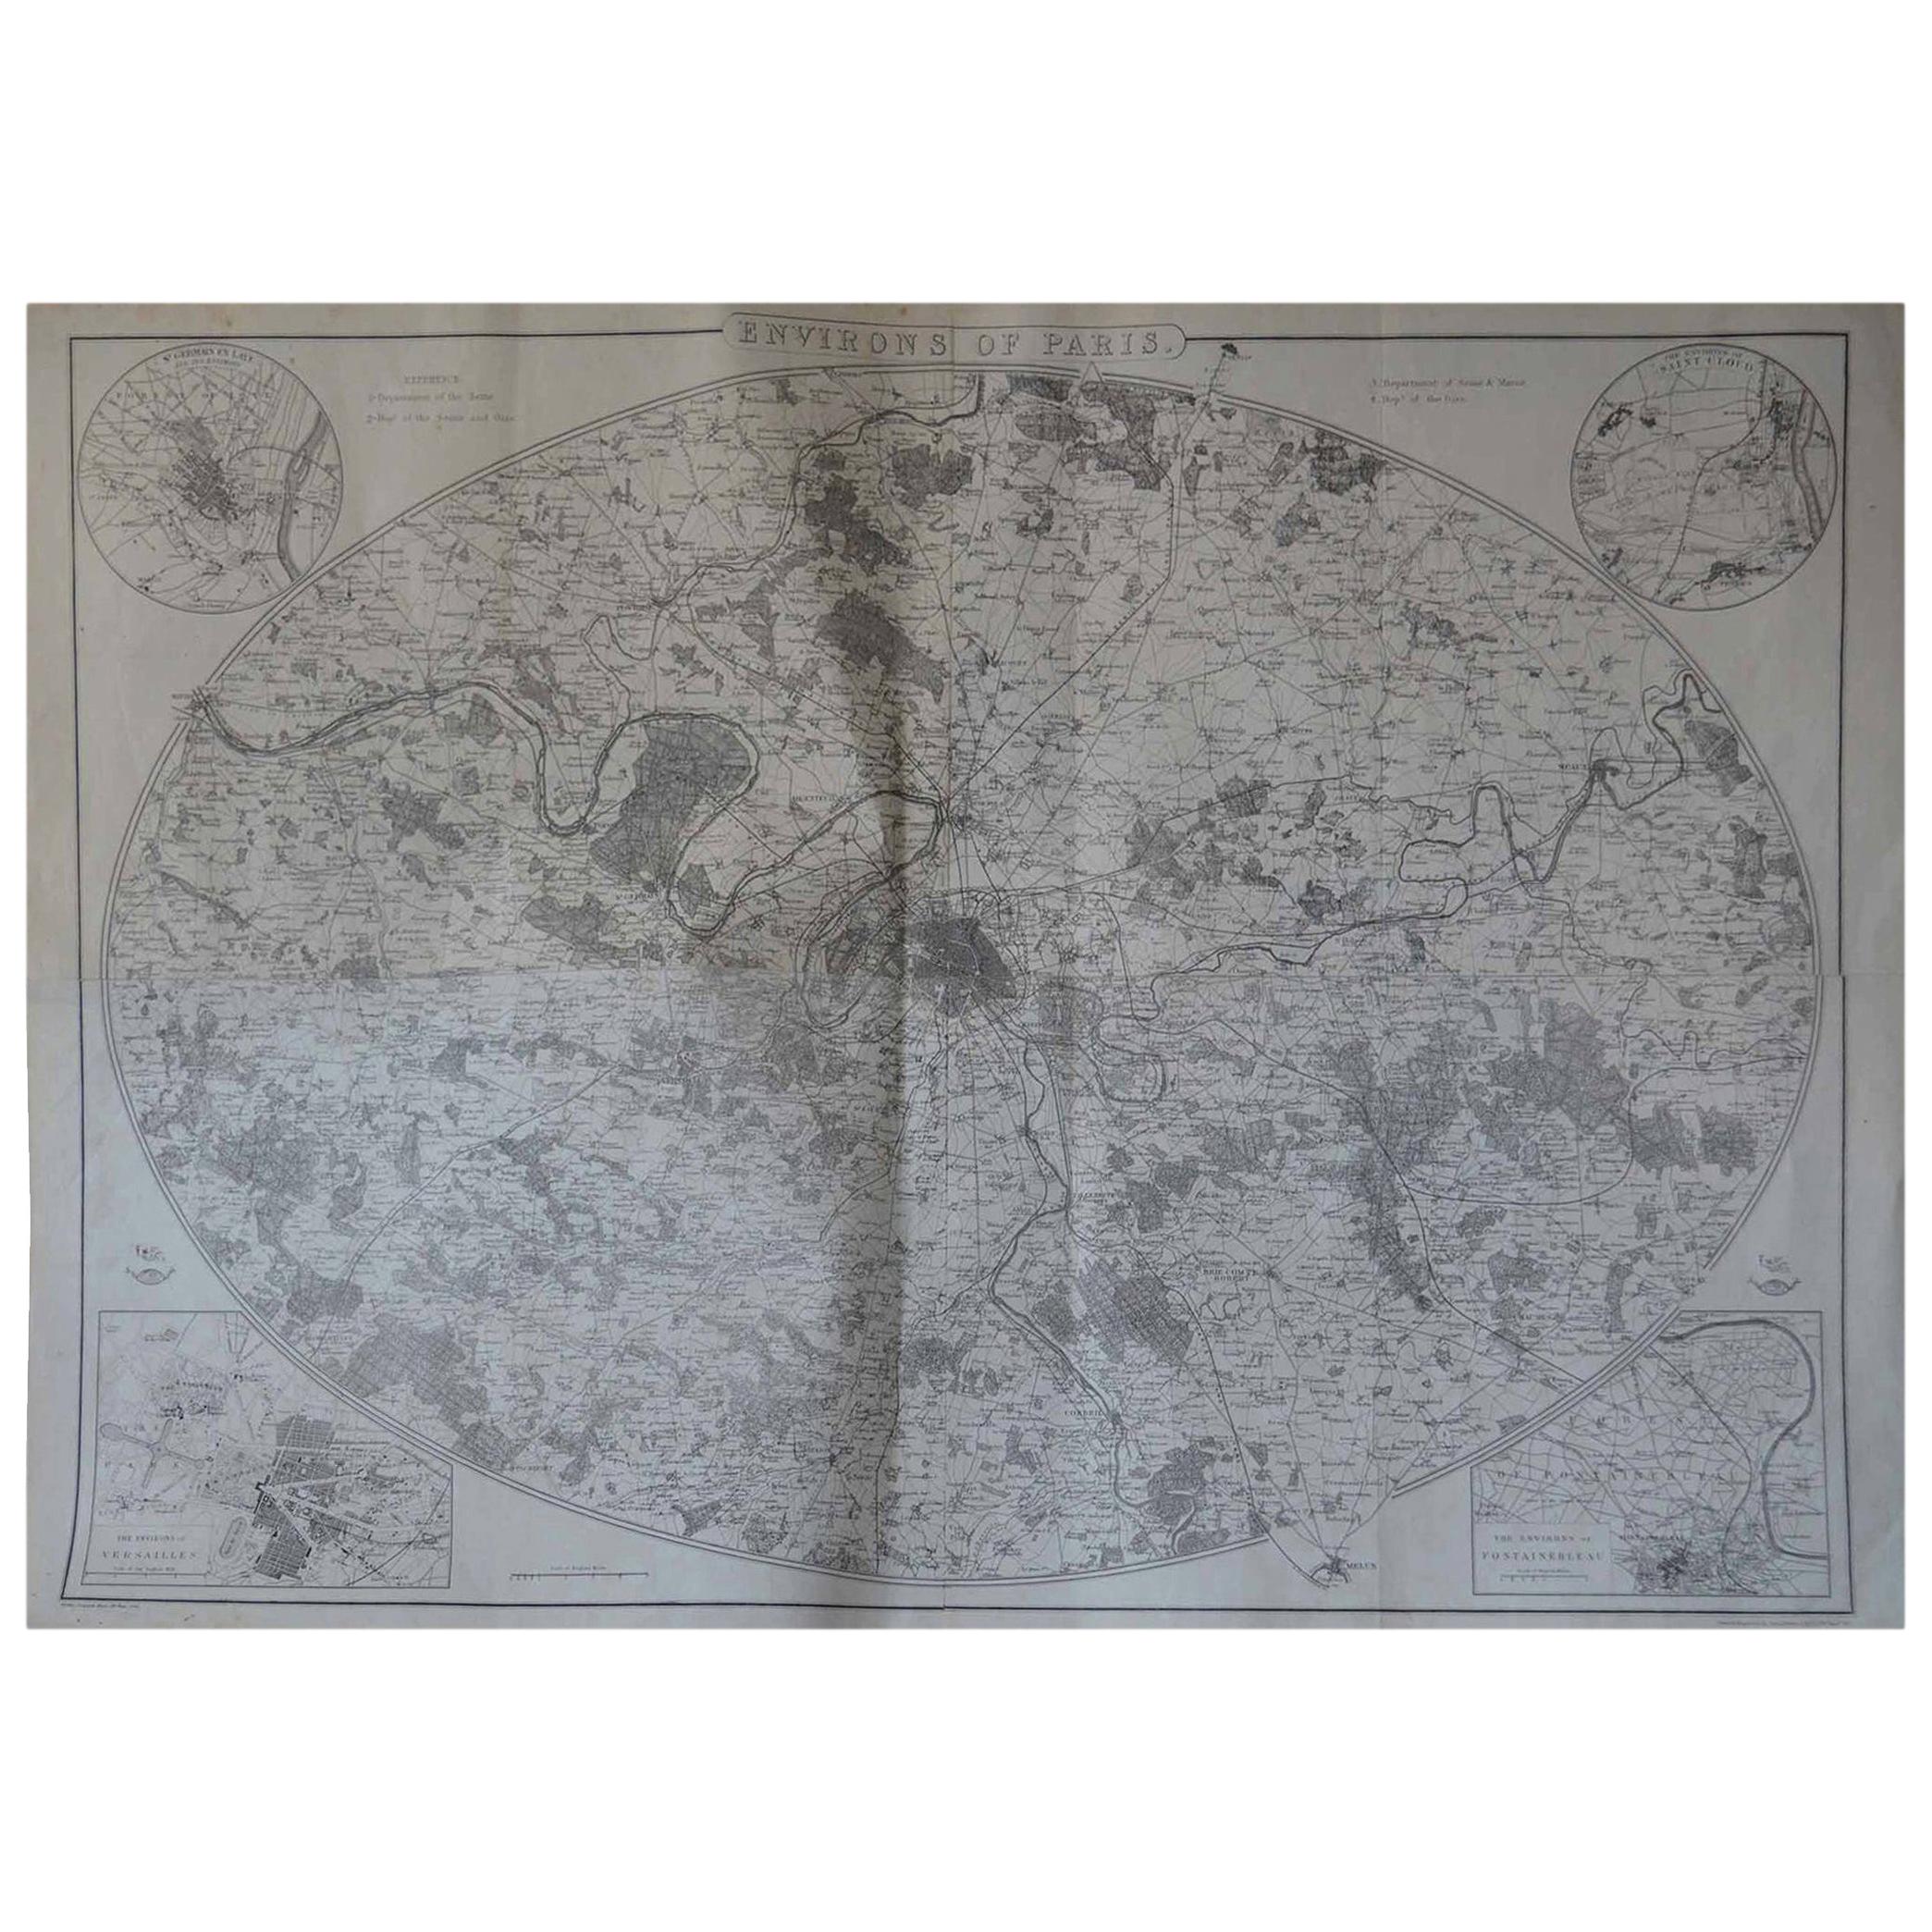 Original Large Antique Map of Paris, France by John Dower, 1861